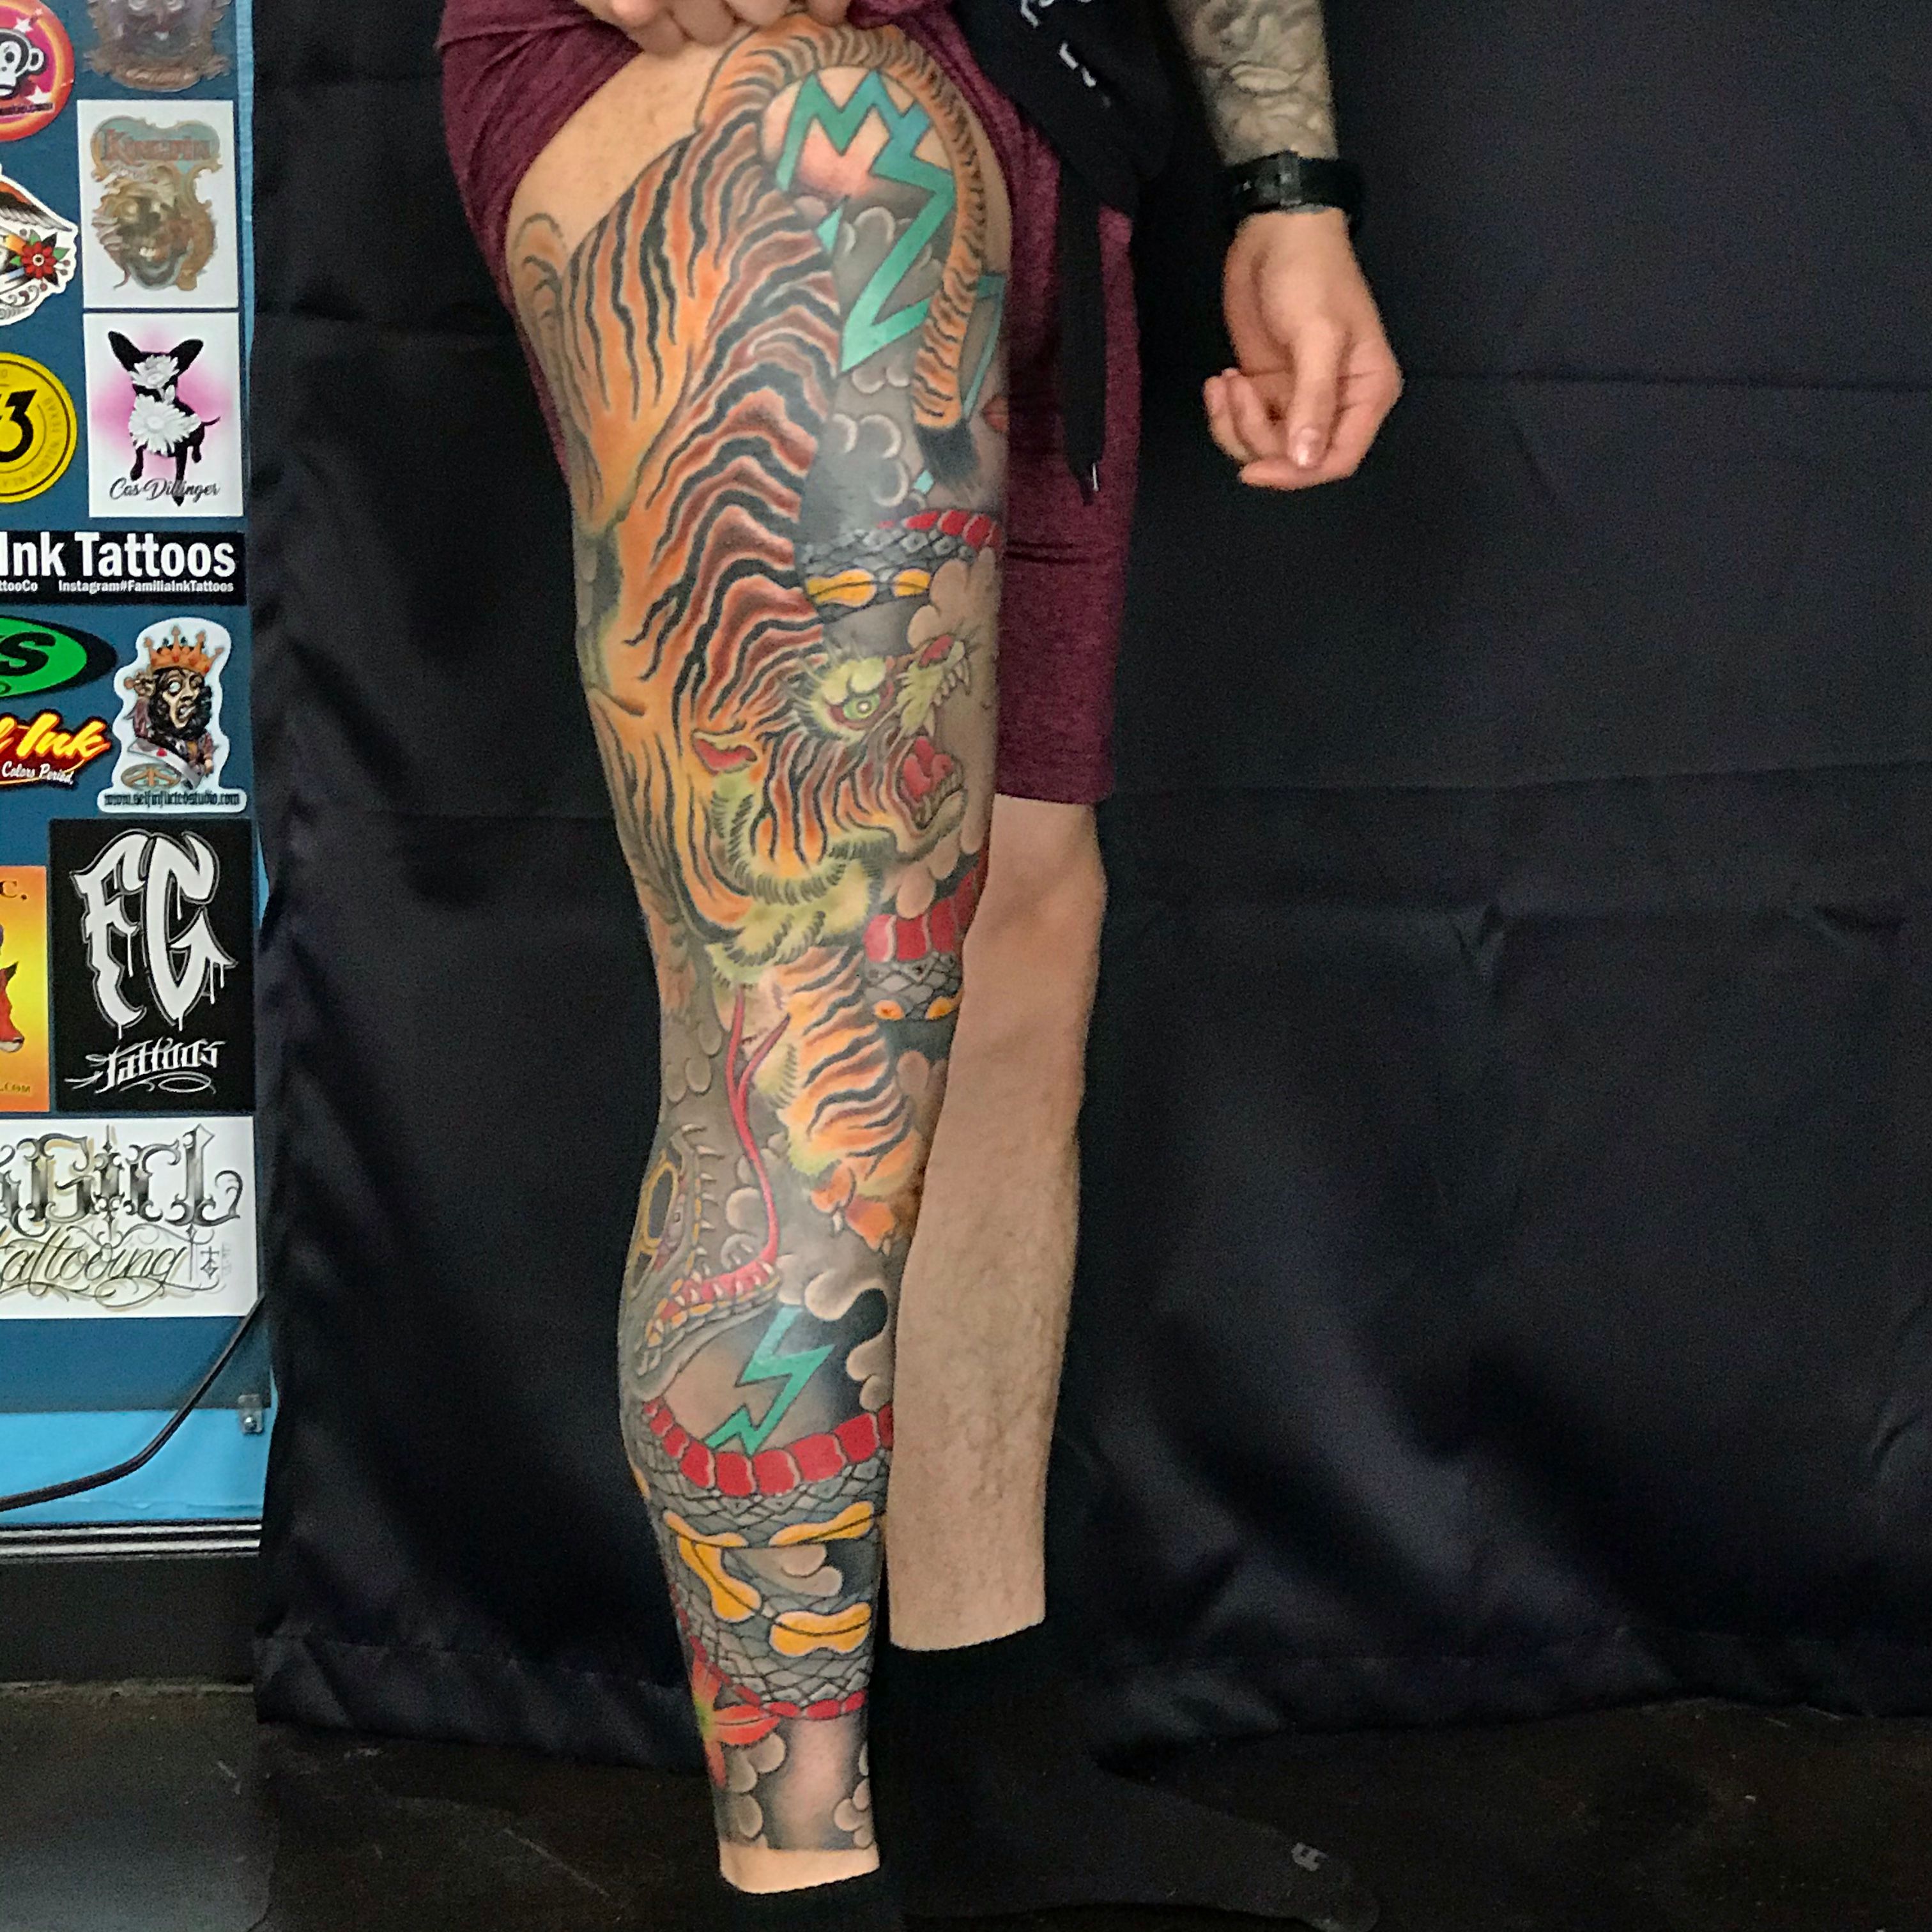 Tattoos by myttoos.com - Full Leg Tattoo anyone? 😻 Artist @maneentattoo |  Facebook